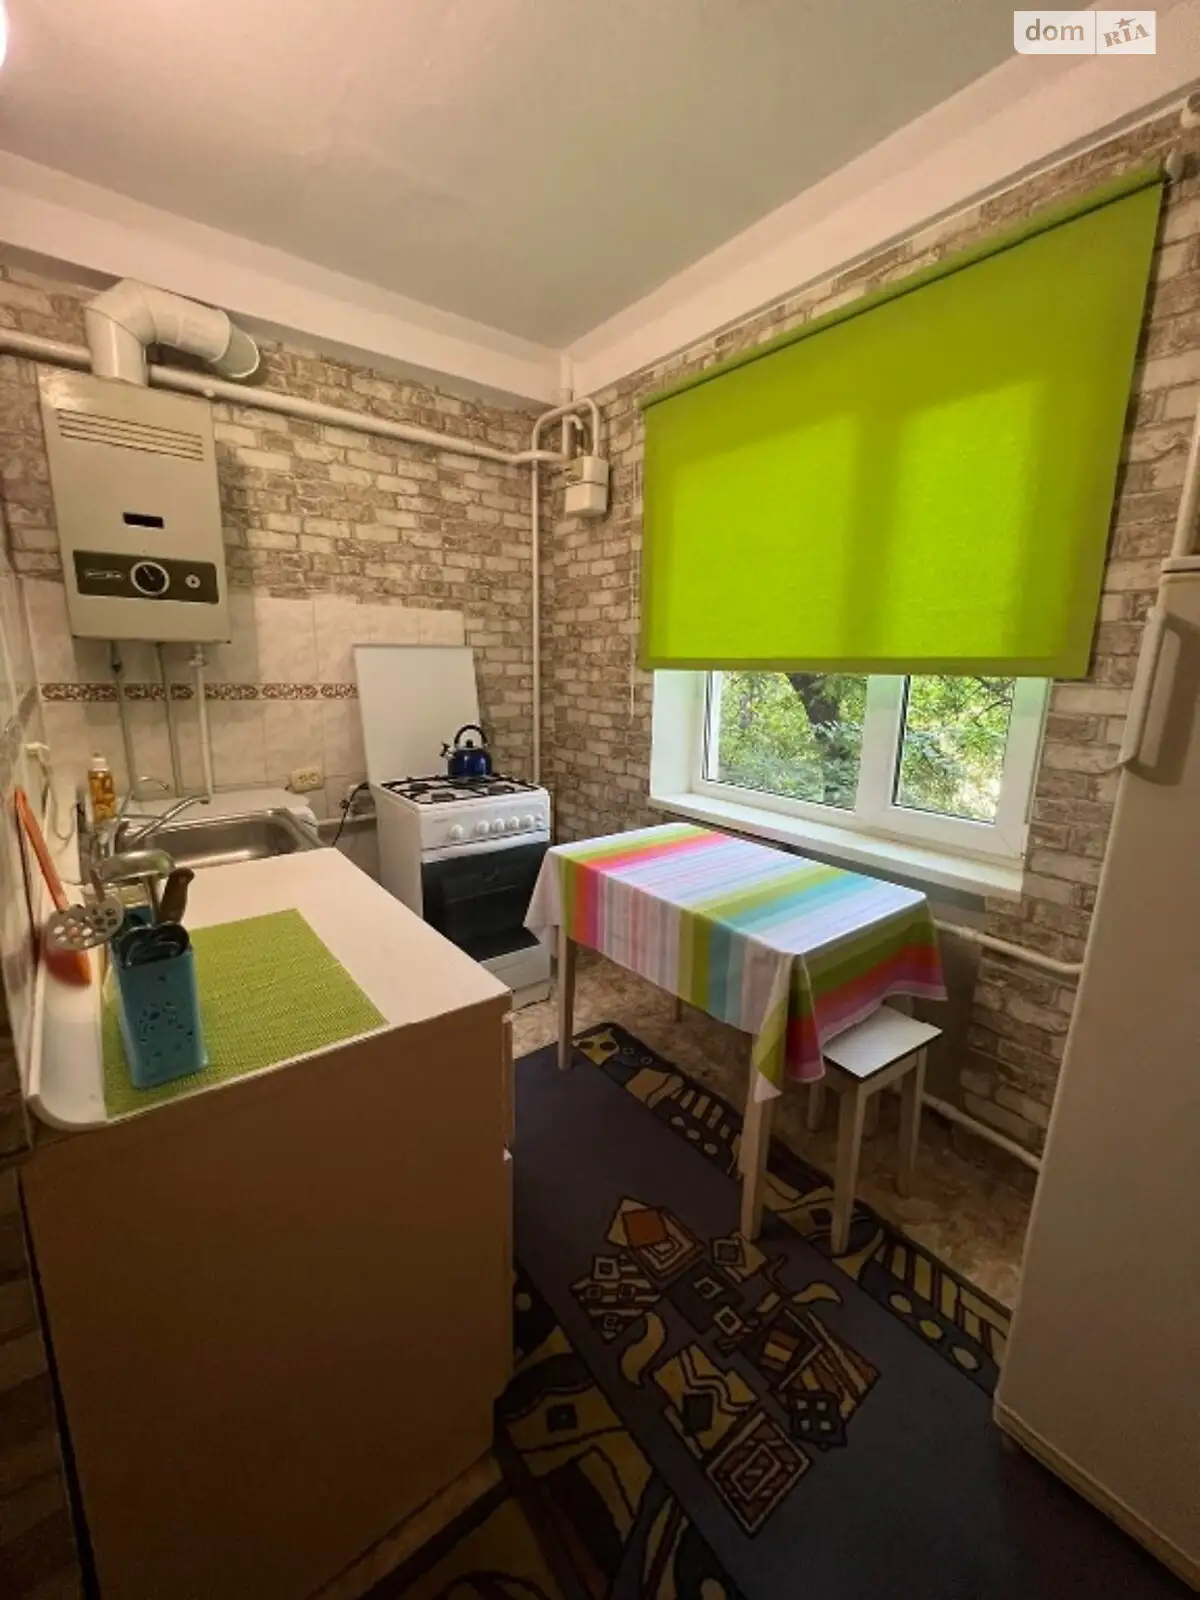 2-кімнатна квартира у Запоріжжі, цена: 600 грн